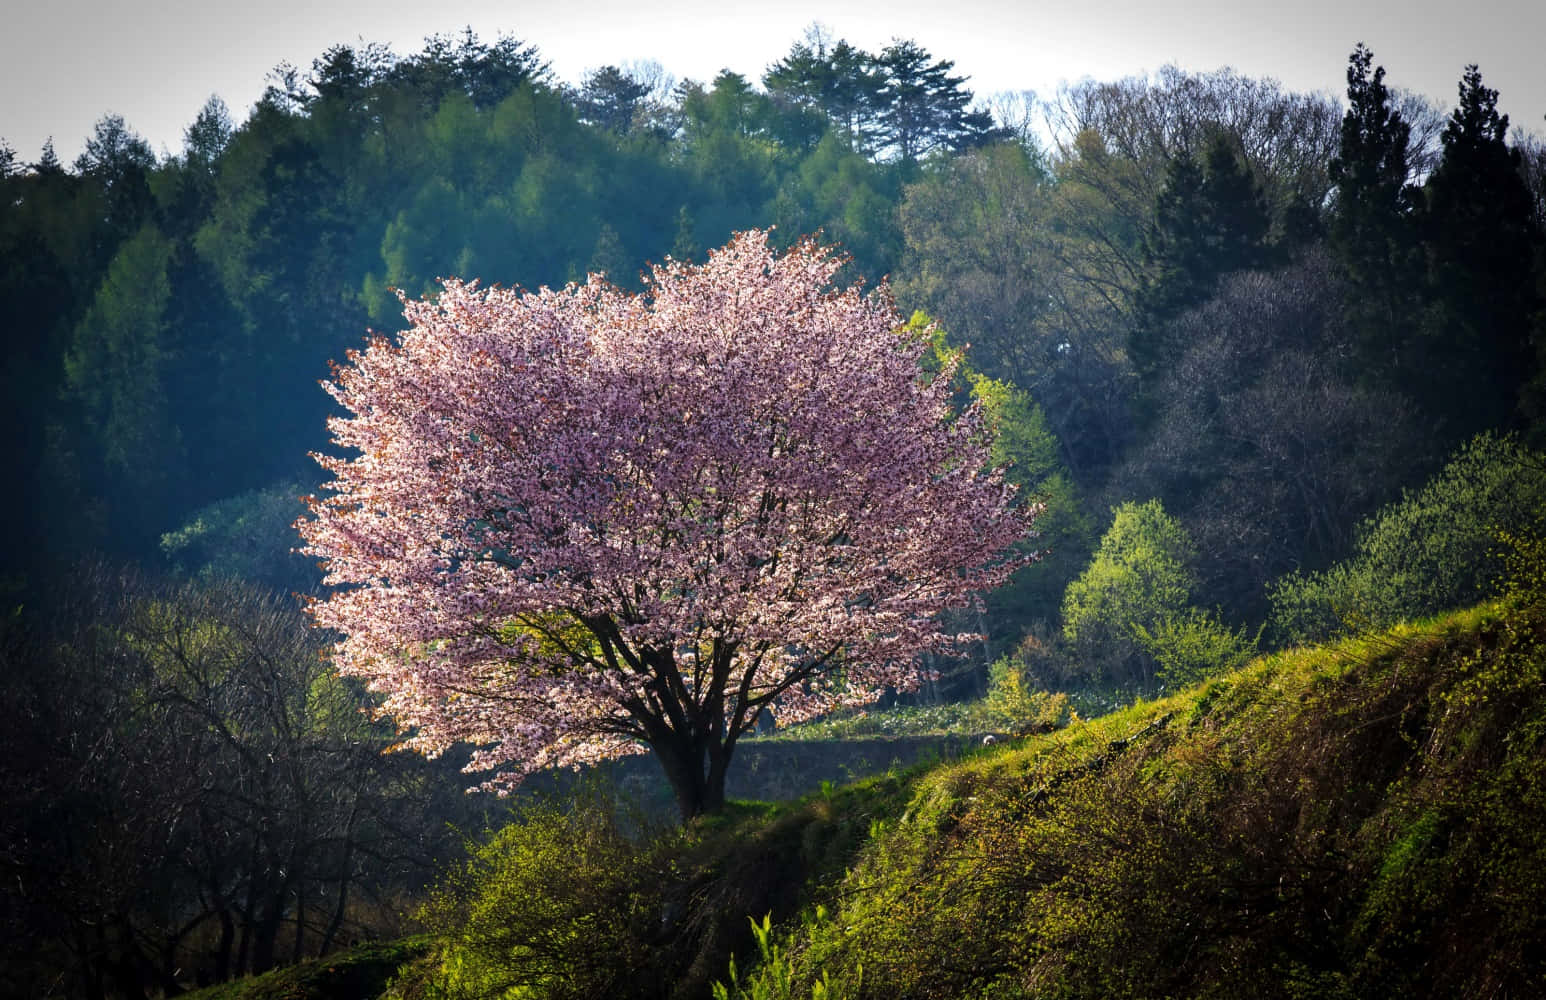 "Beautiful blossom of the Sakura tree in full bloom"